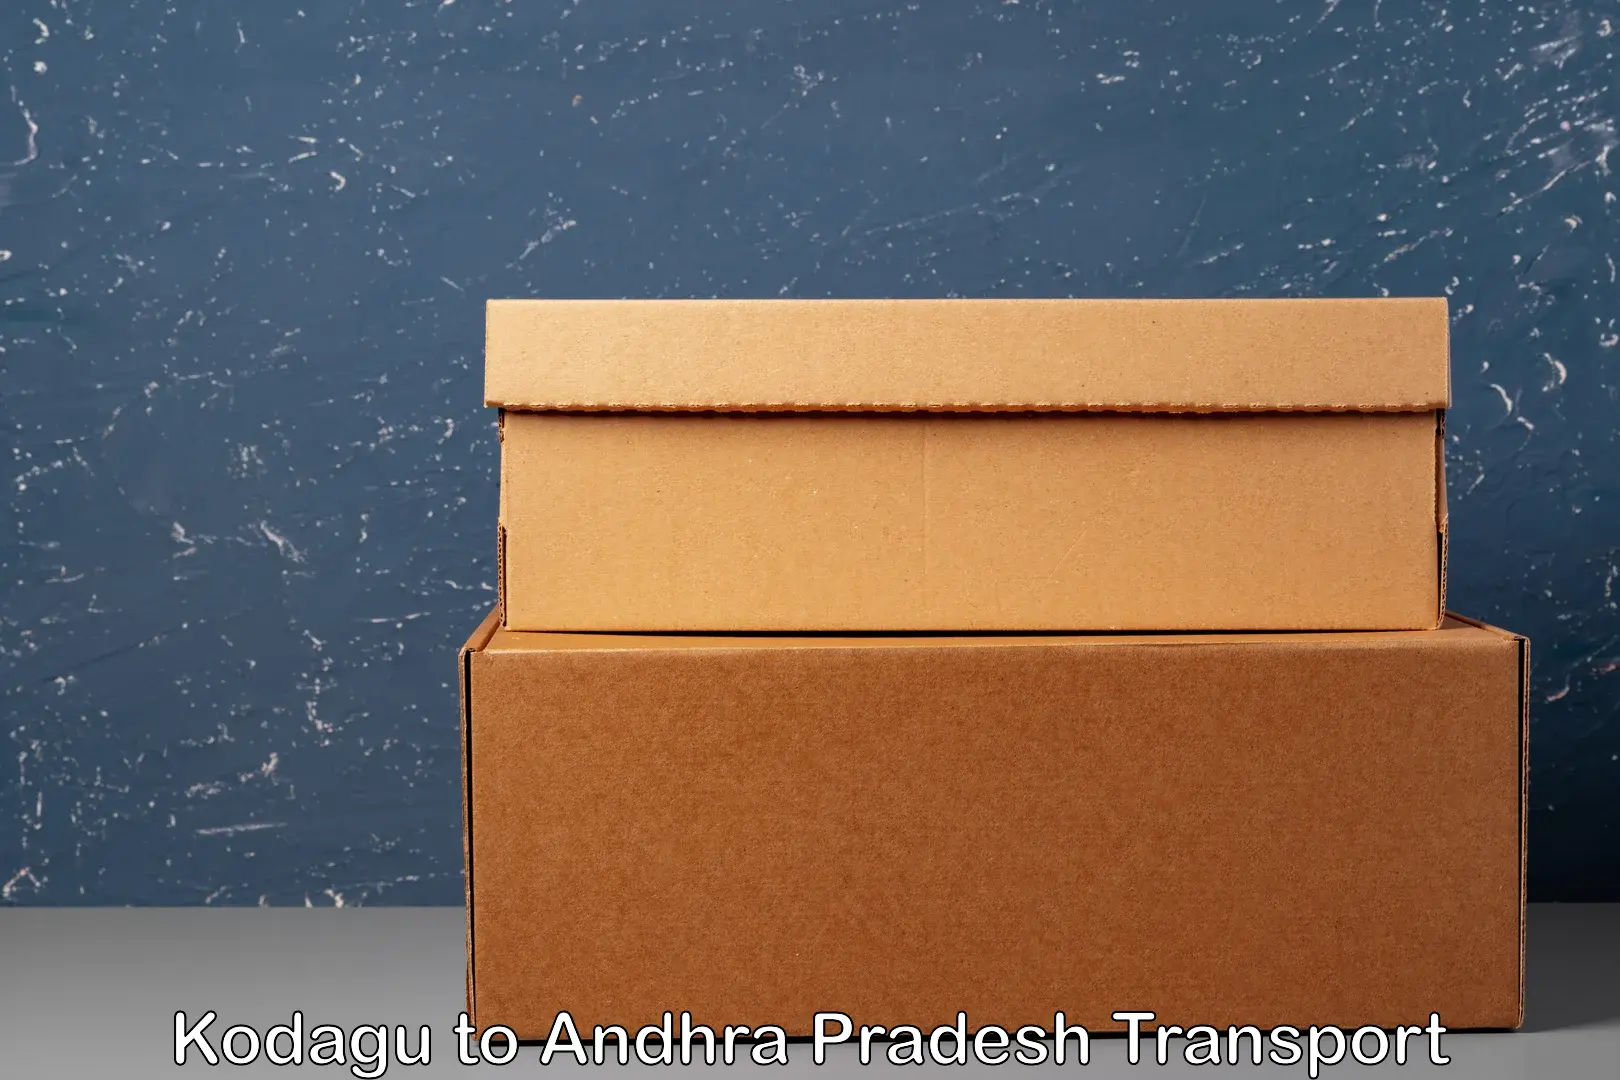 Transport in sharing Kodagu to Andhra Pradesh